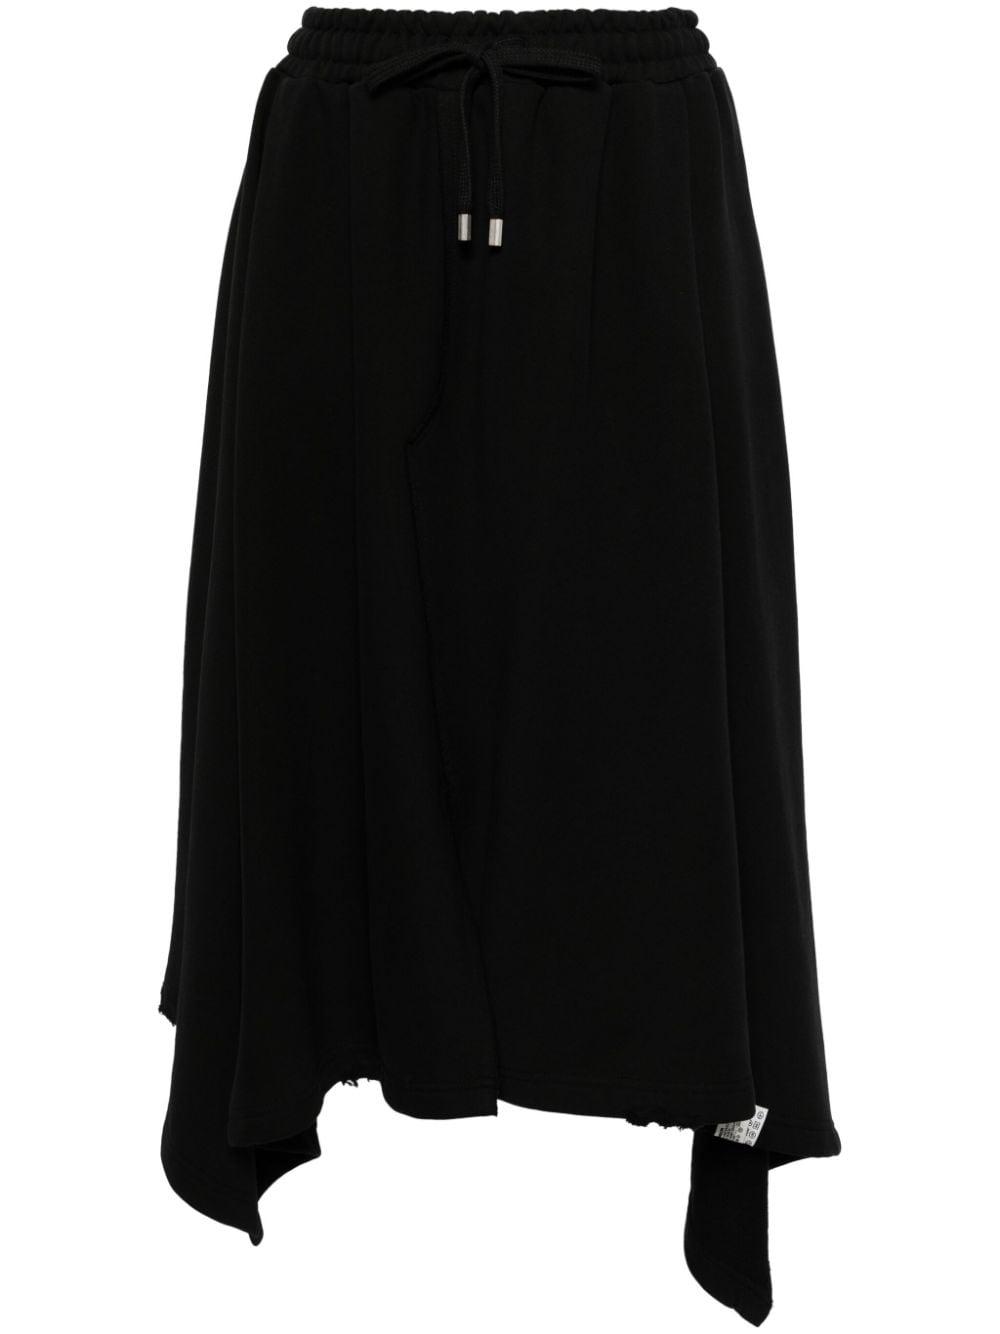 Adererror Levena Asymmetric Cotton Skirt in Black | Lyst